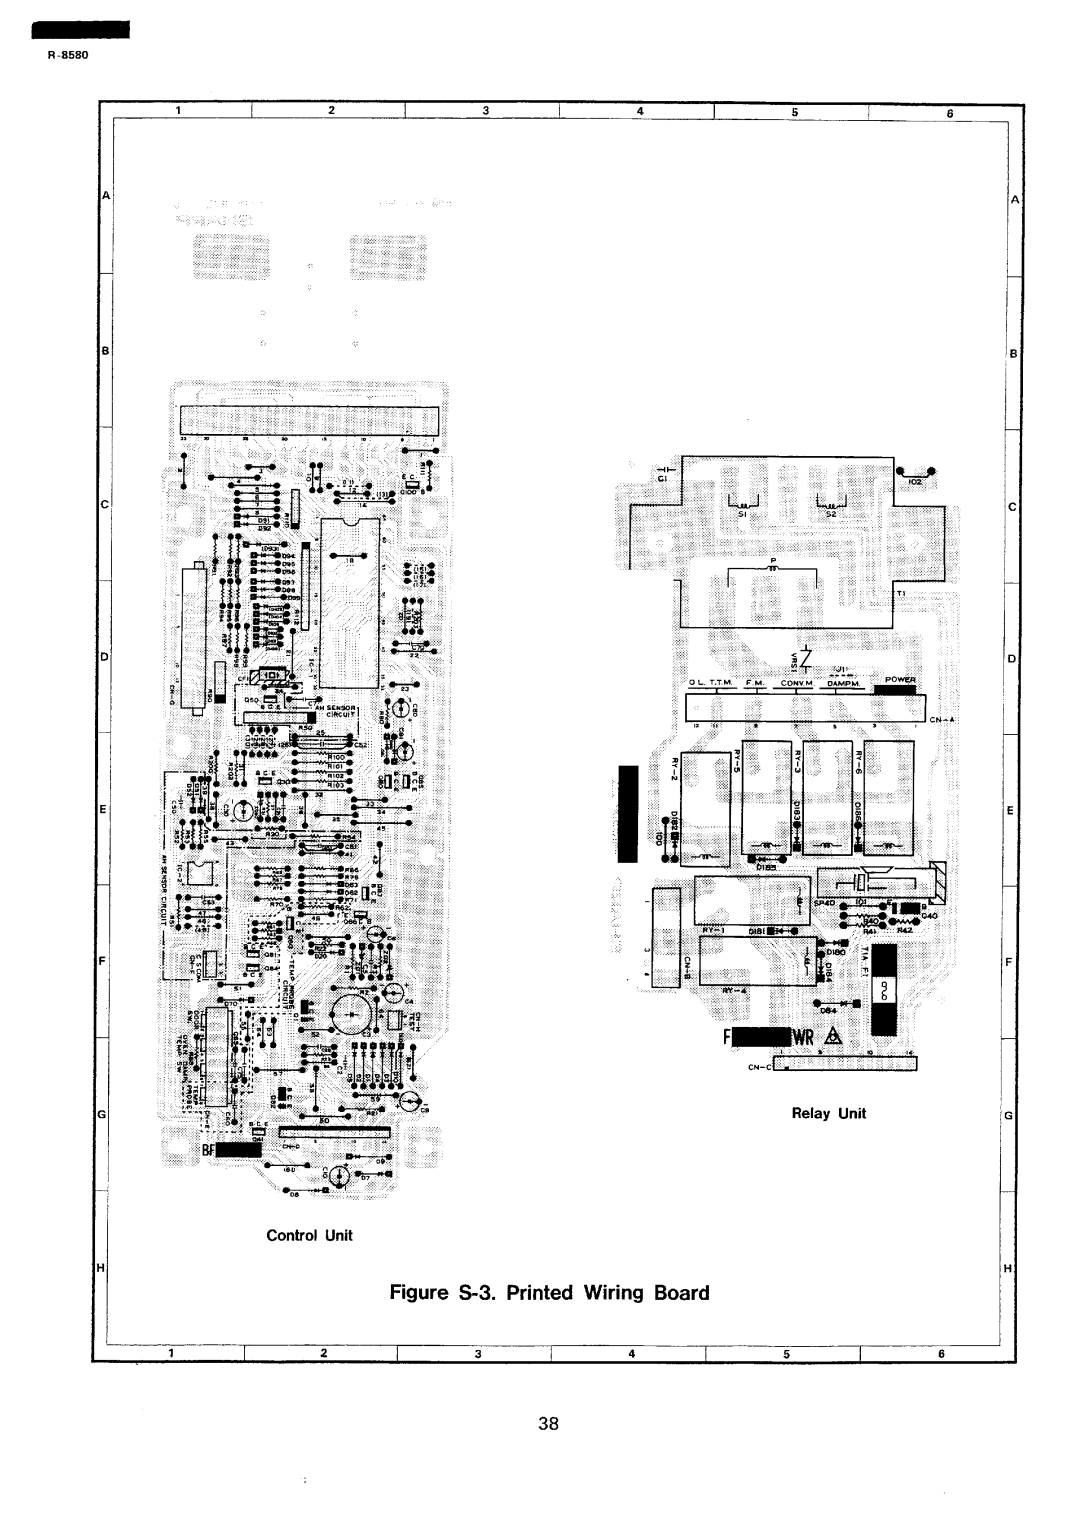 Sharp r-8580 manual Figure S-3.Printed Wiring Board II I, Relay Unit Control Unit, 0 L. T.TM, Conv M, P0Wef.q, Oampm 